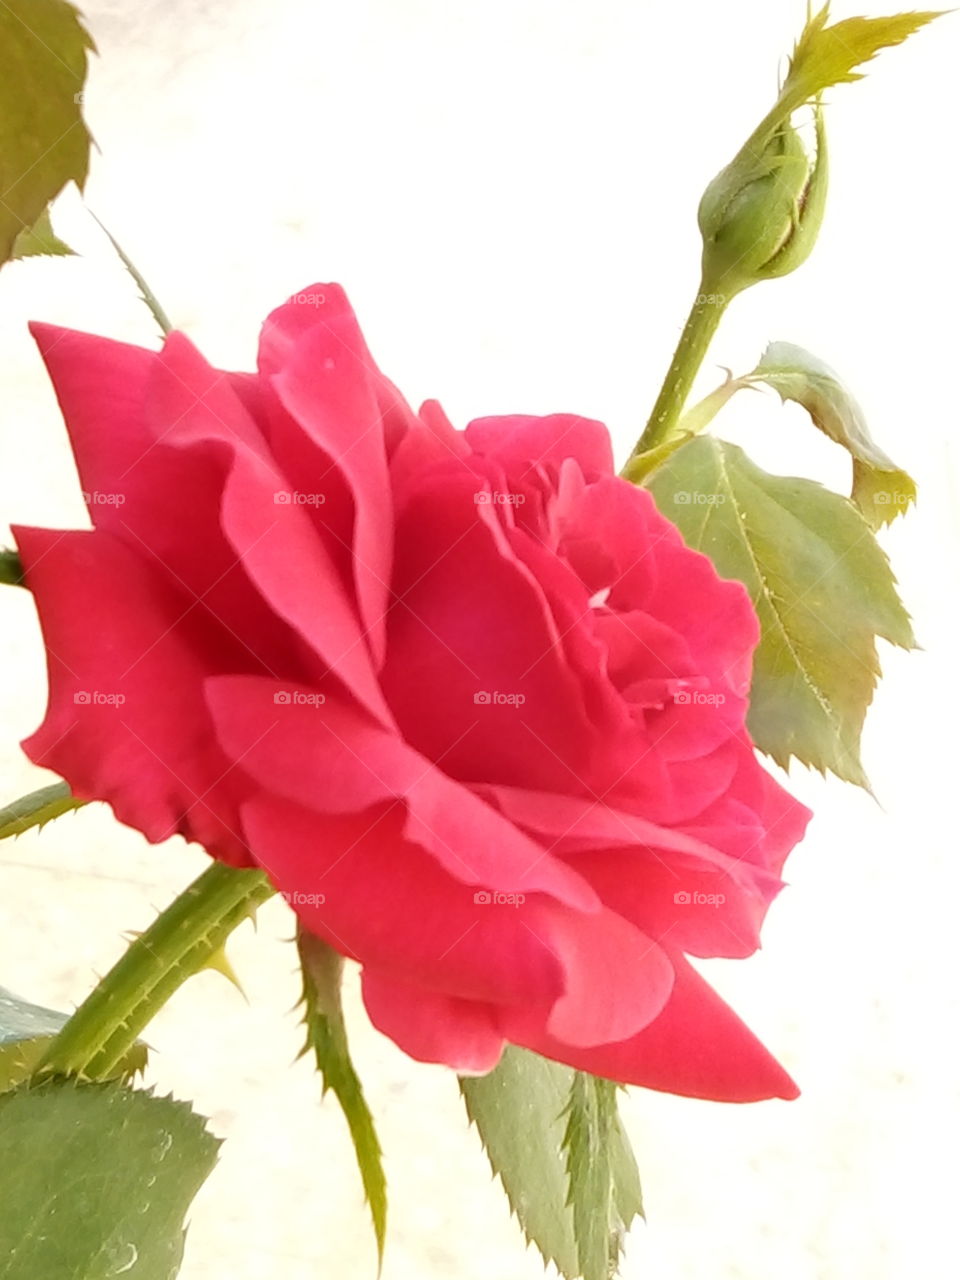 #rose #love #cute #USA #jordan #meqbel #bood #turkey #Tatlım
#nice #